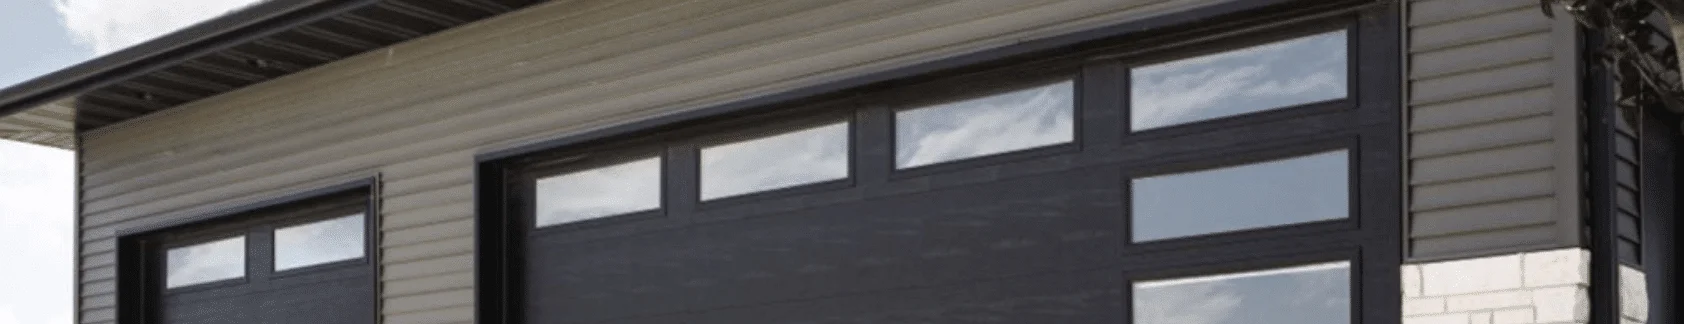 House with different Garage Door Styles